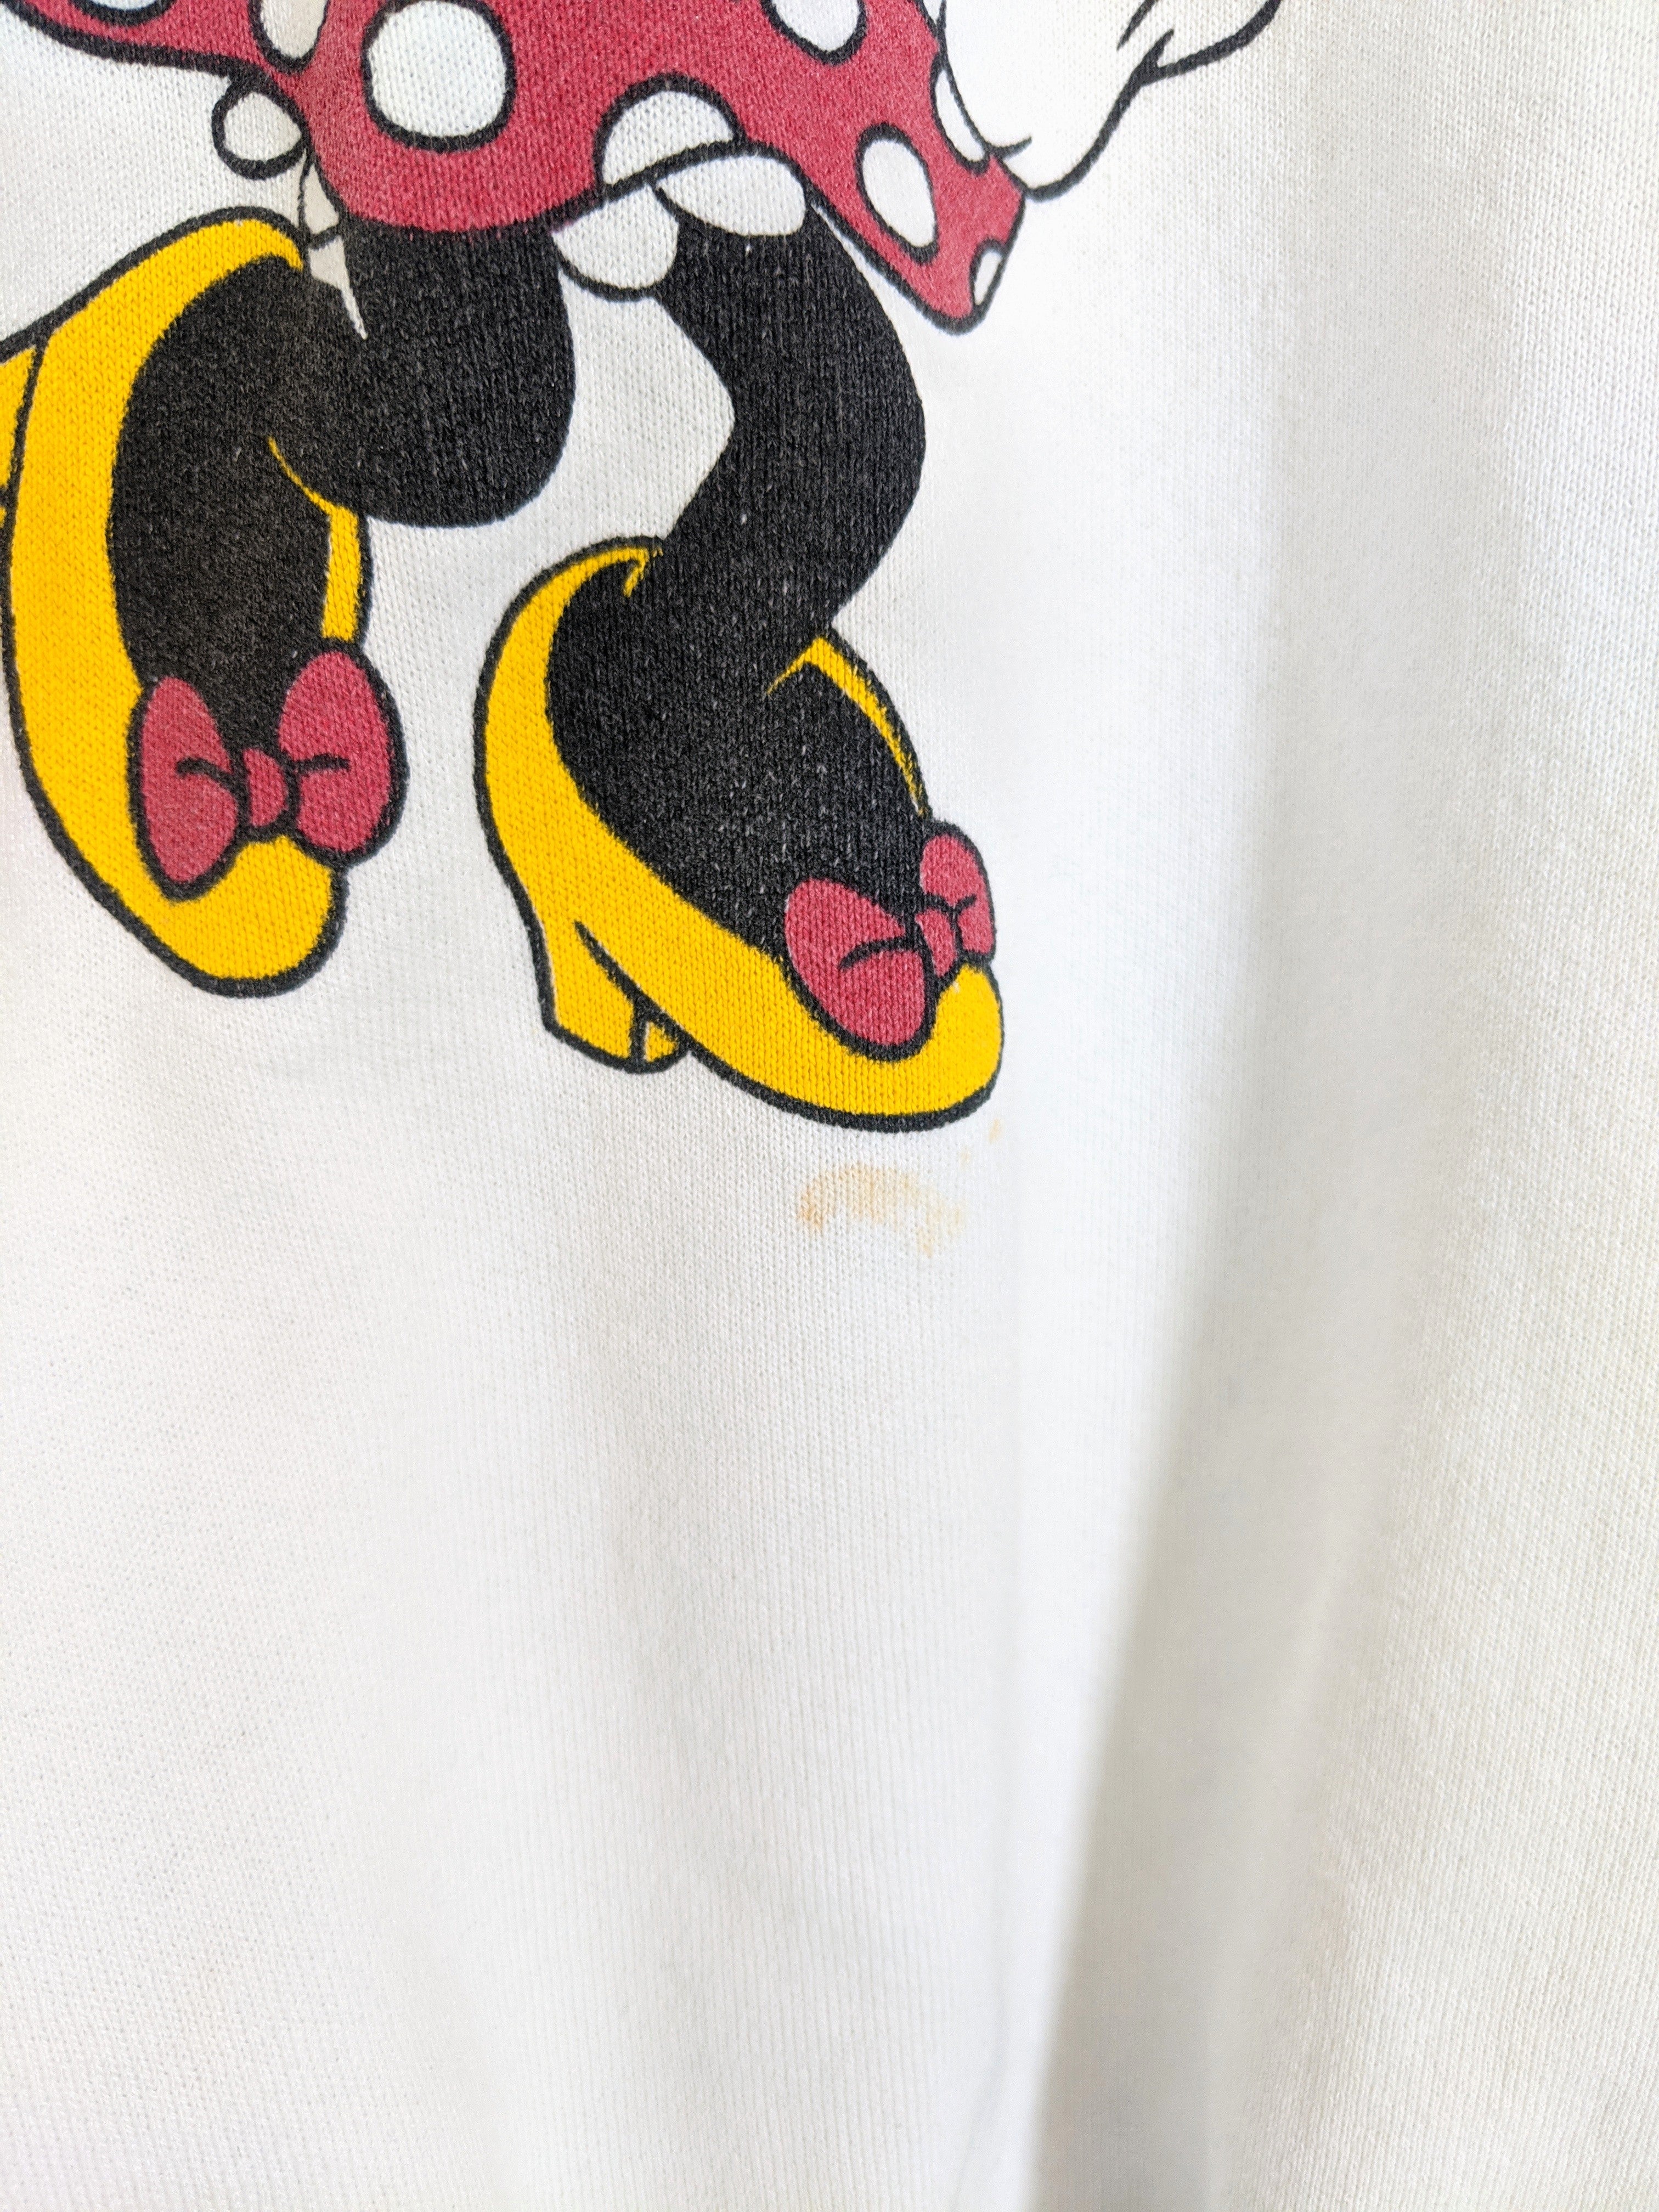 80's Minnie Mouse Sweatshirt (M)